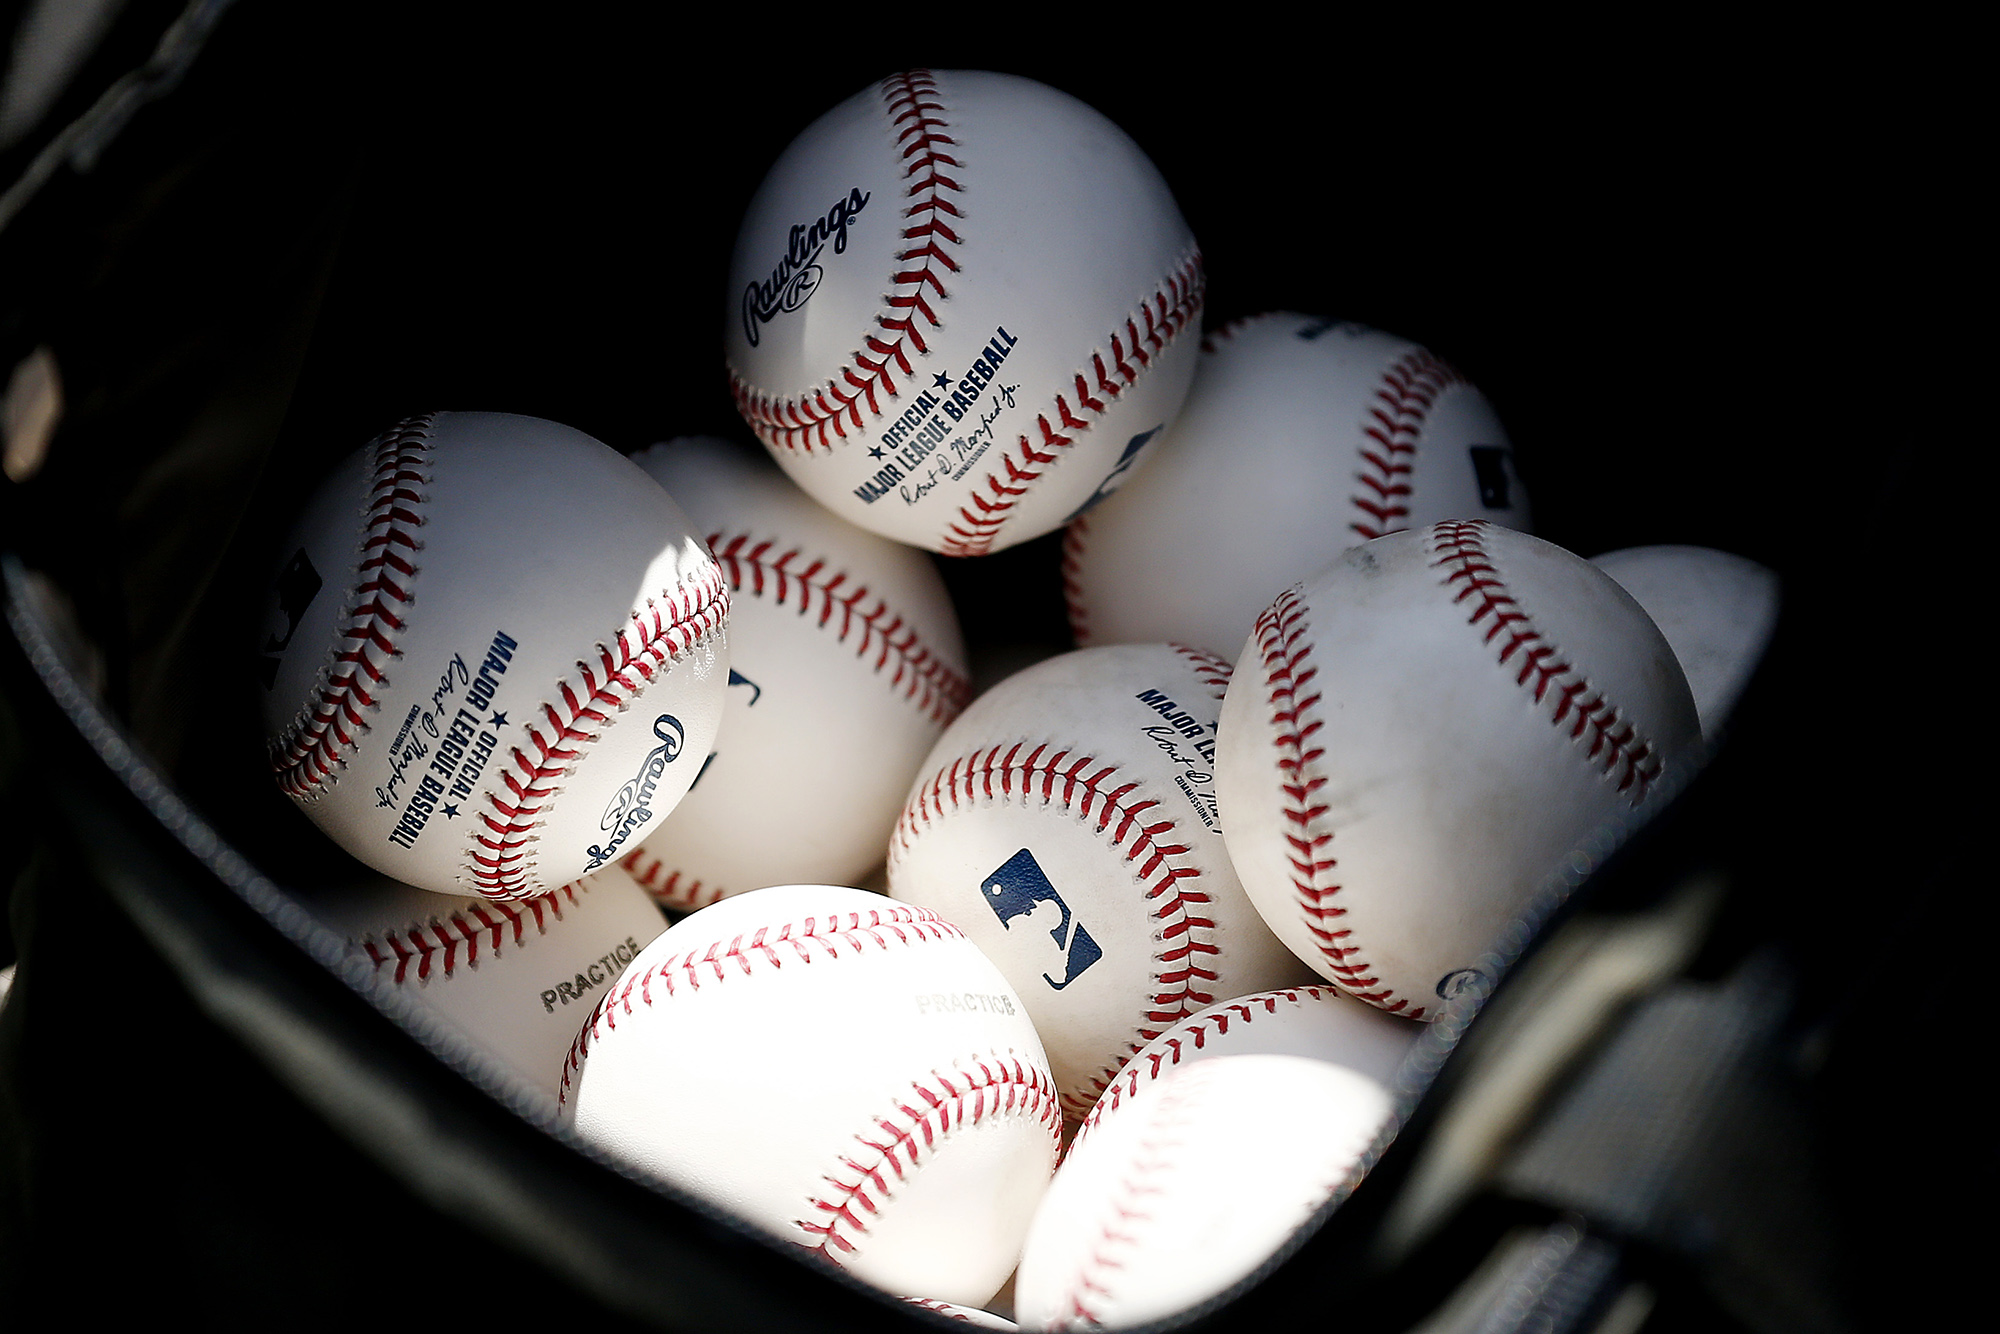 Complex' $185 million Major League Baseball deal closes minor